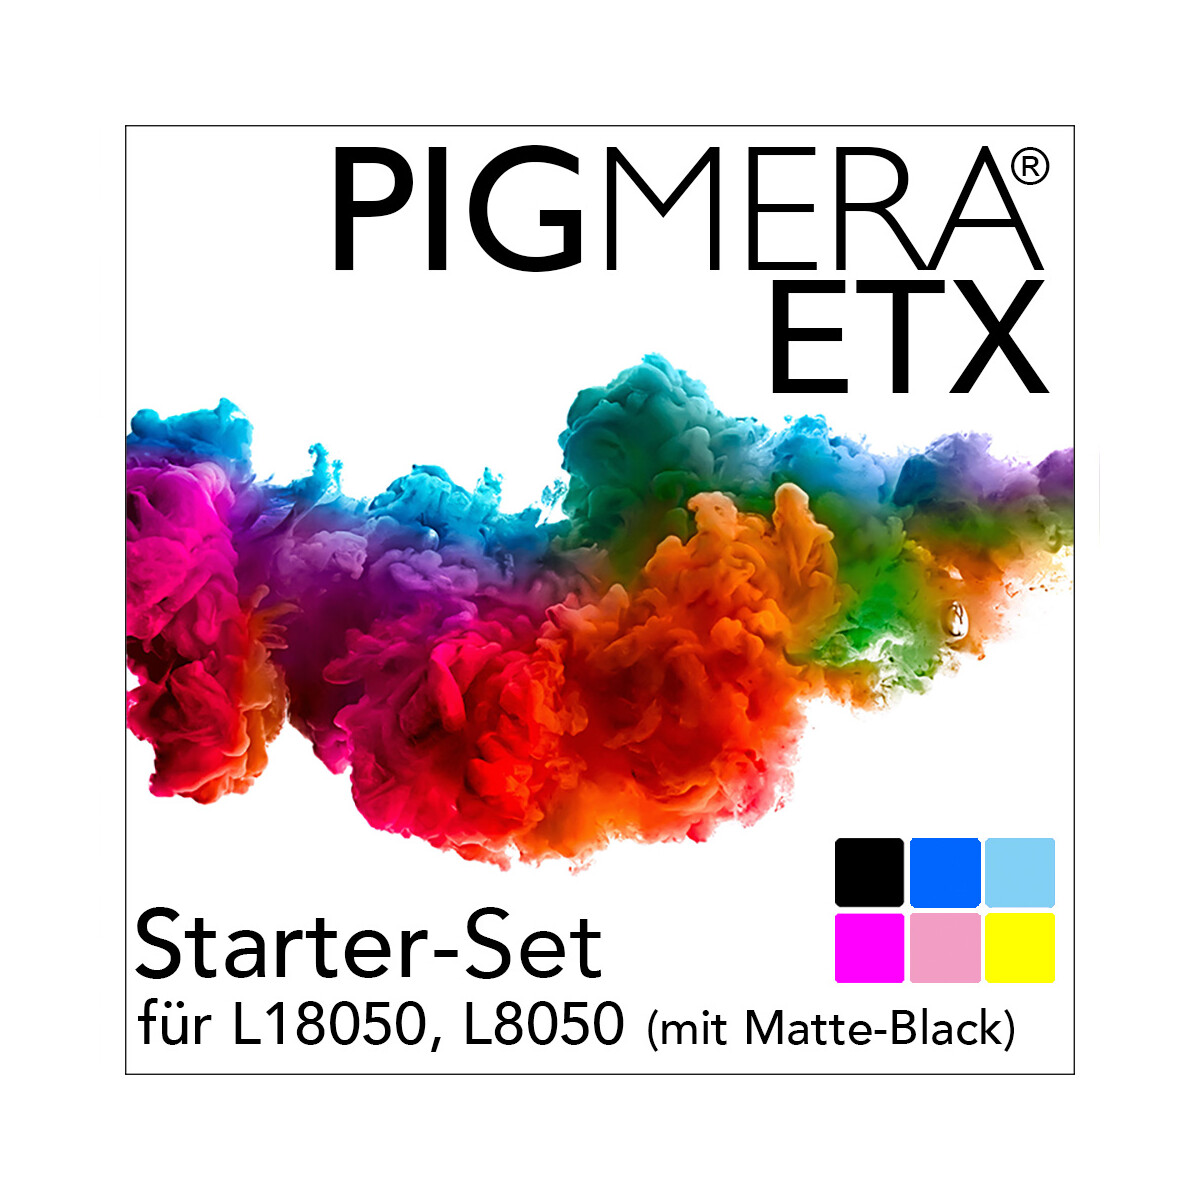 Pigmera ETX (Pigment) Starter-Set L18050, L8050 with...